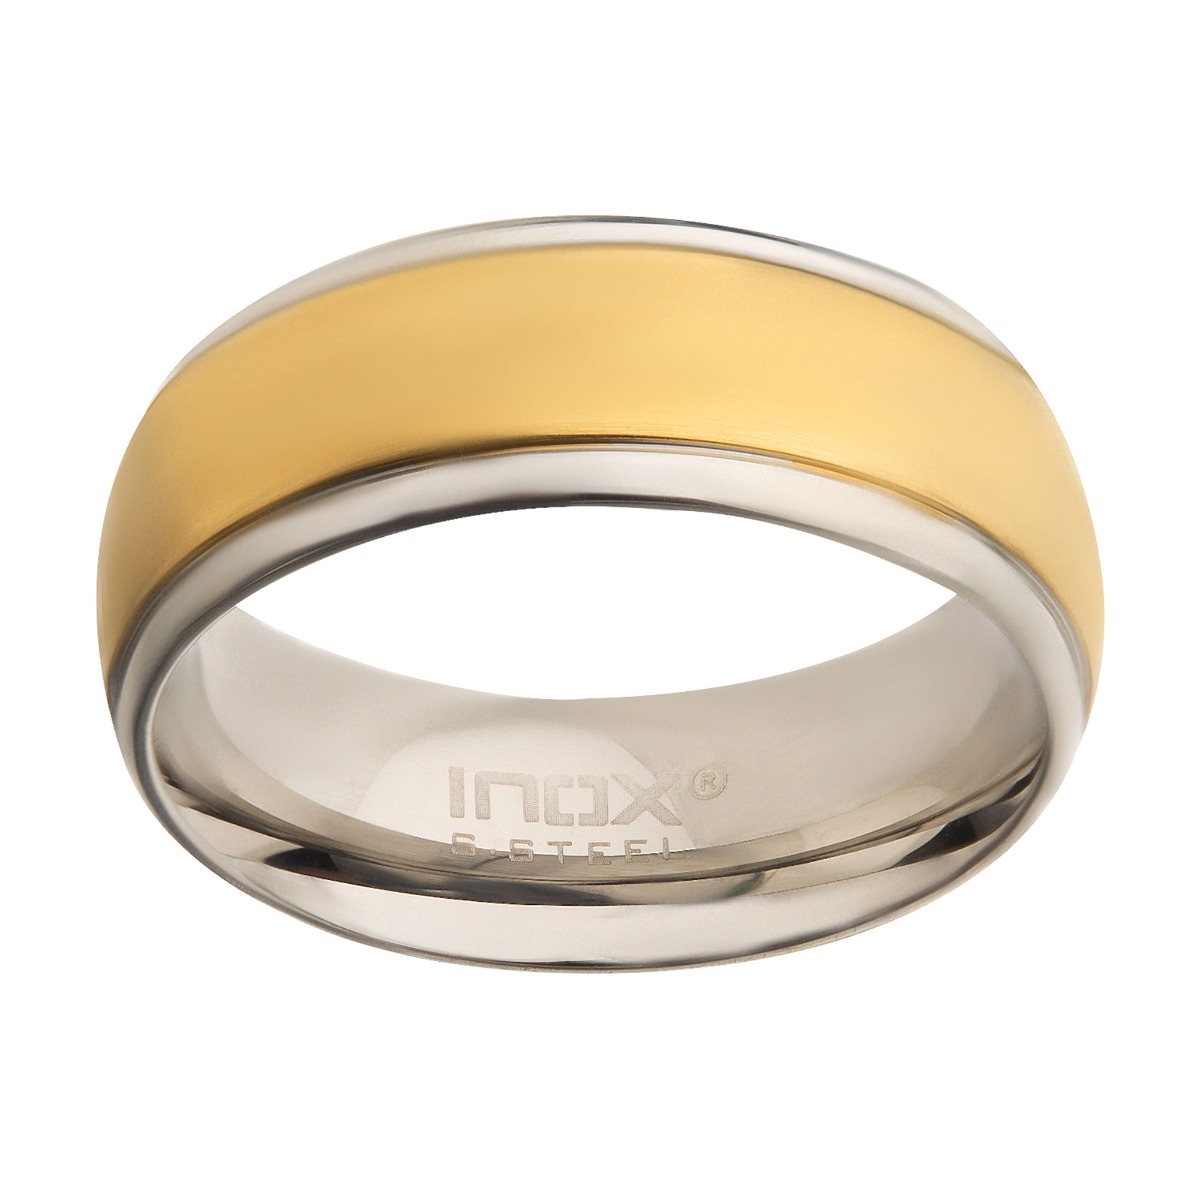 Steel & Gold Plated Patterned Design Ring Image 2 P.K. Bennett Jewelers Mundelein, IL